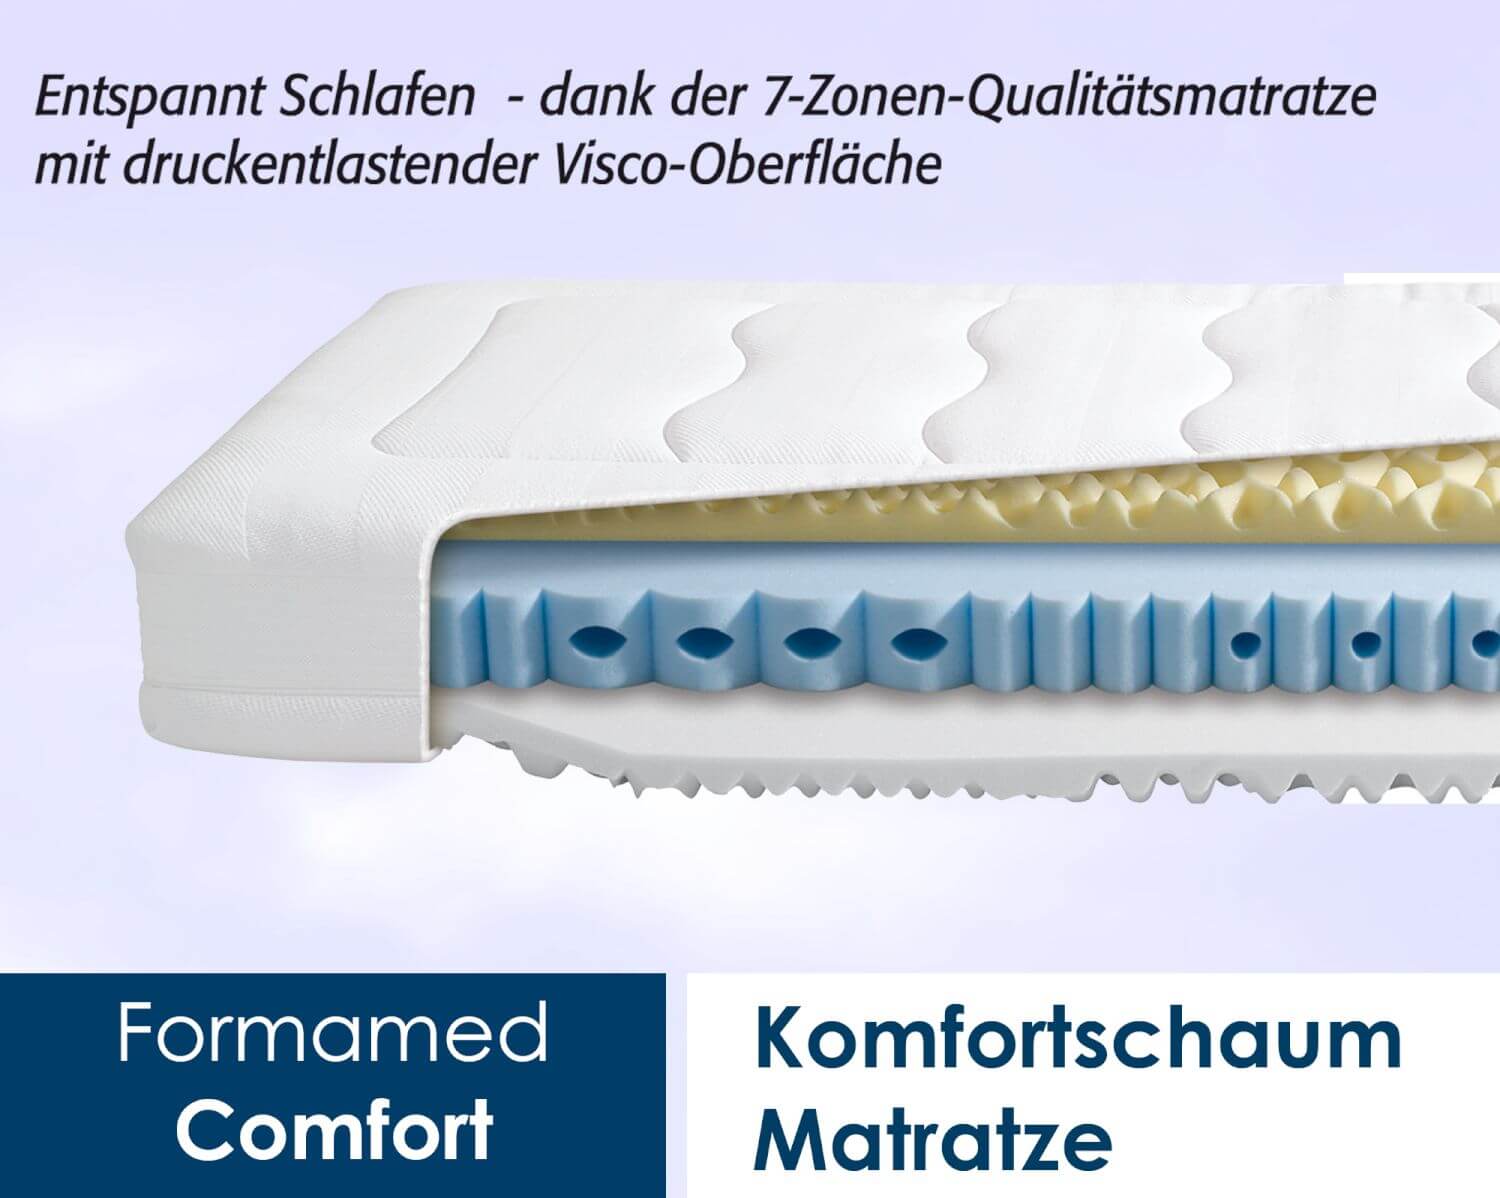 Diamona Formamed Comfort Matratzen kaufen • slewo.com